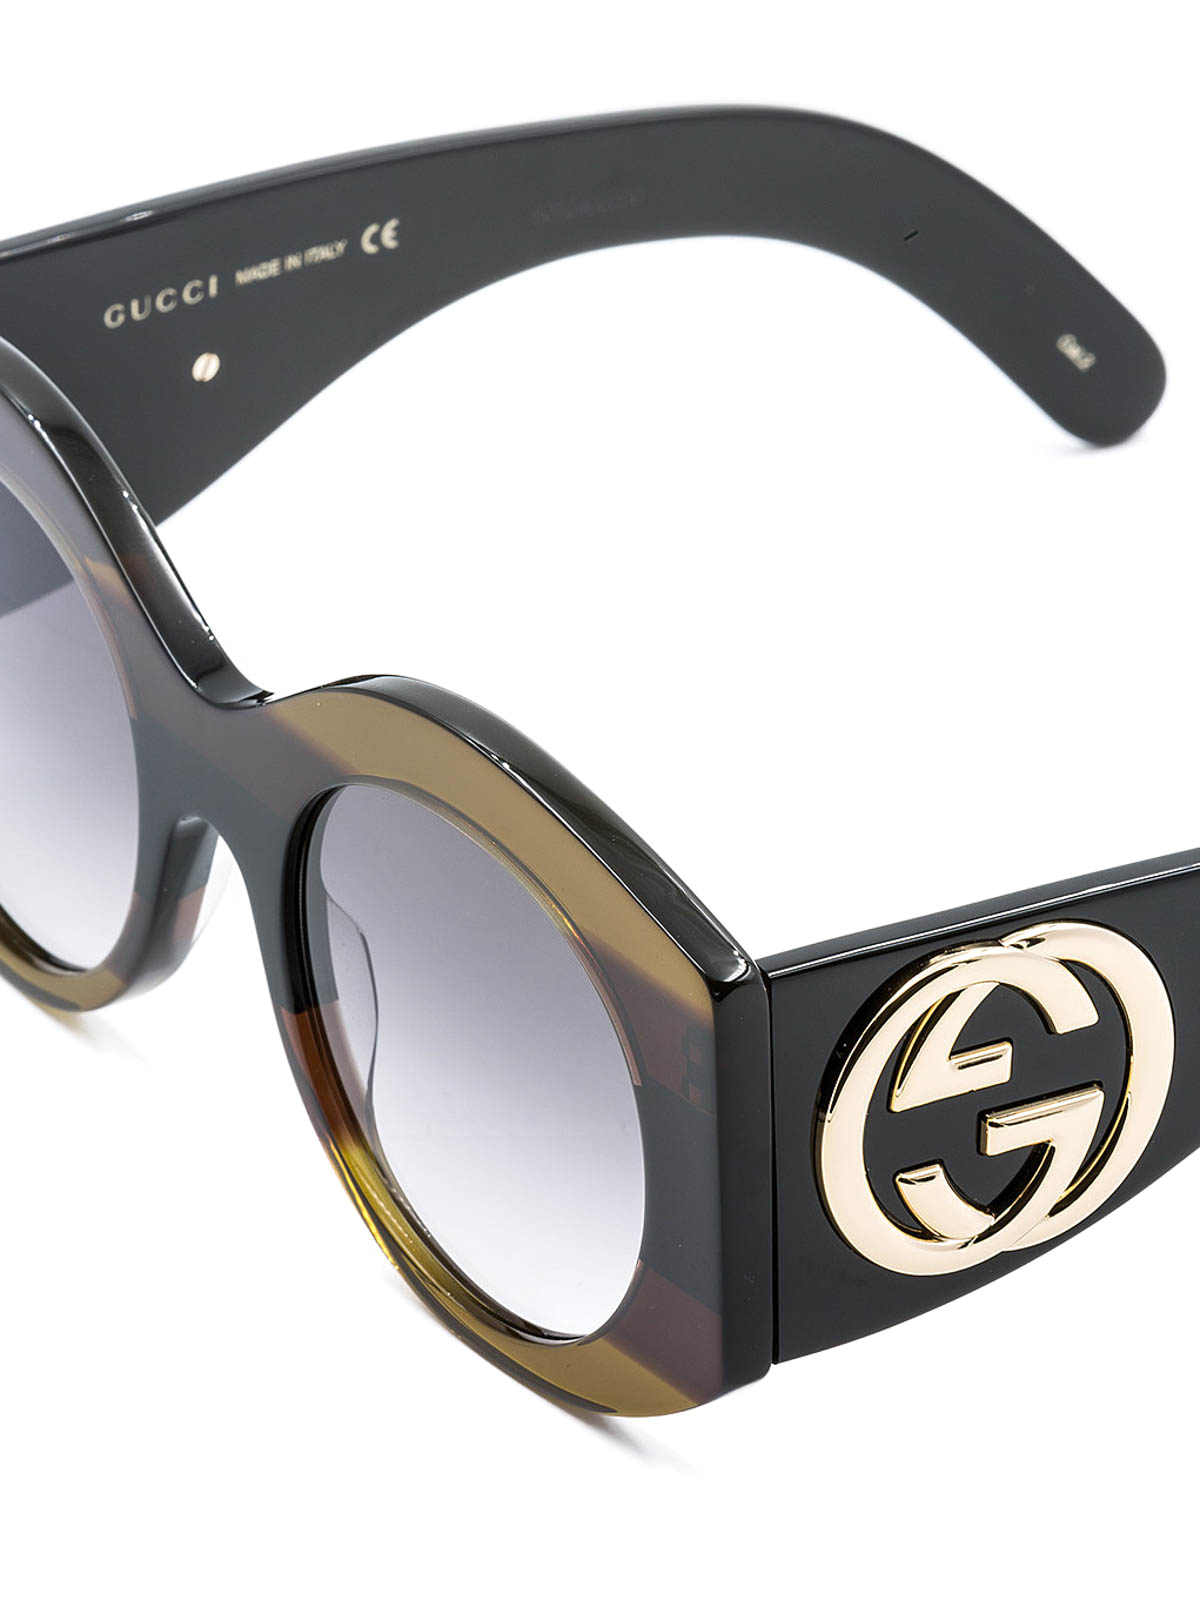 Sunglasses Gucci - Interlocking G round sunglasses - GG0177S3 | iKRIX.com